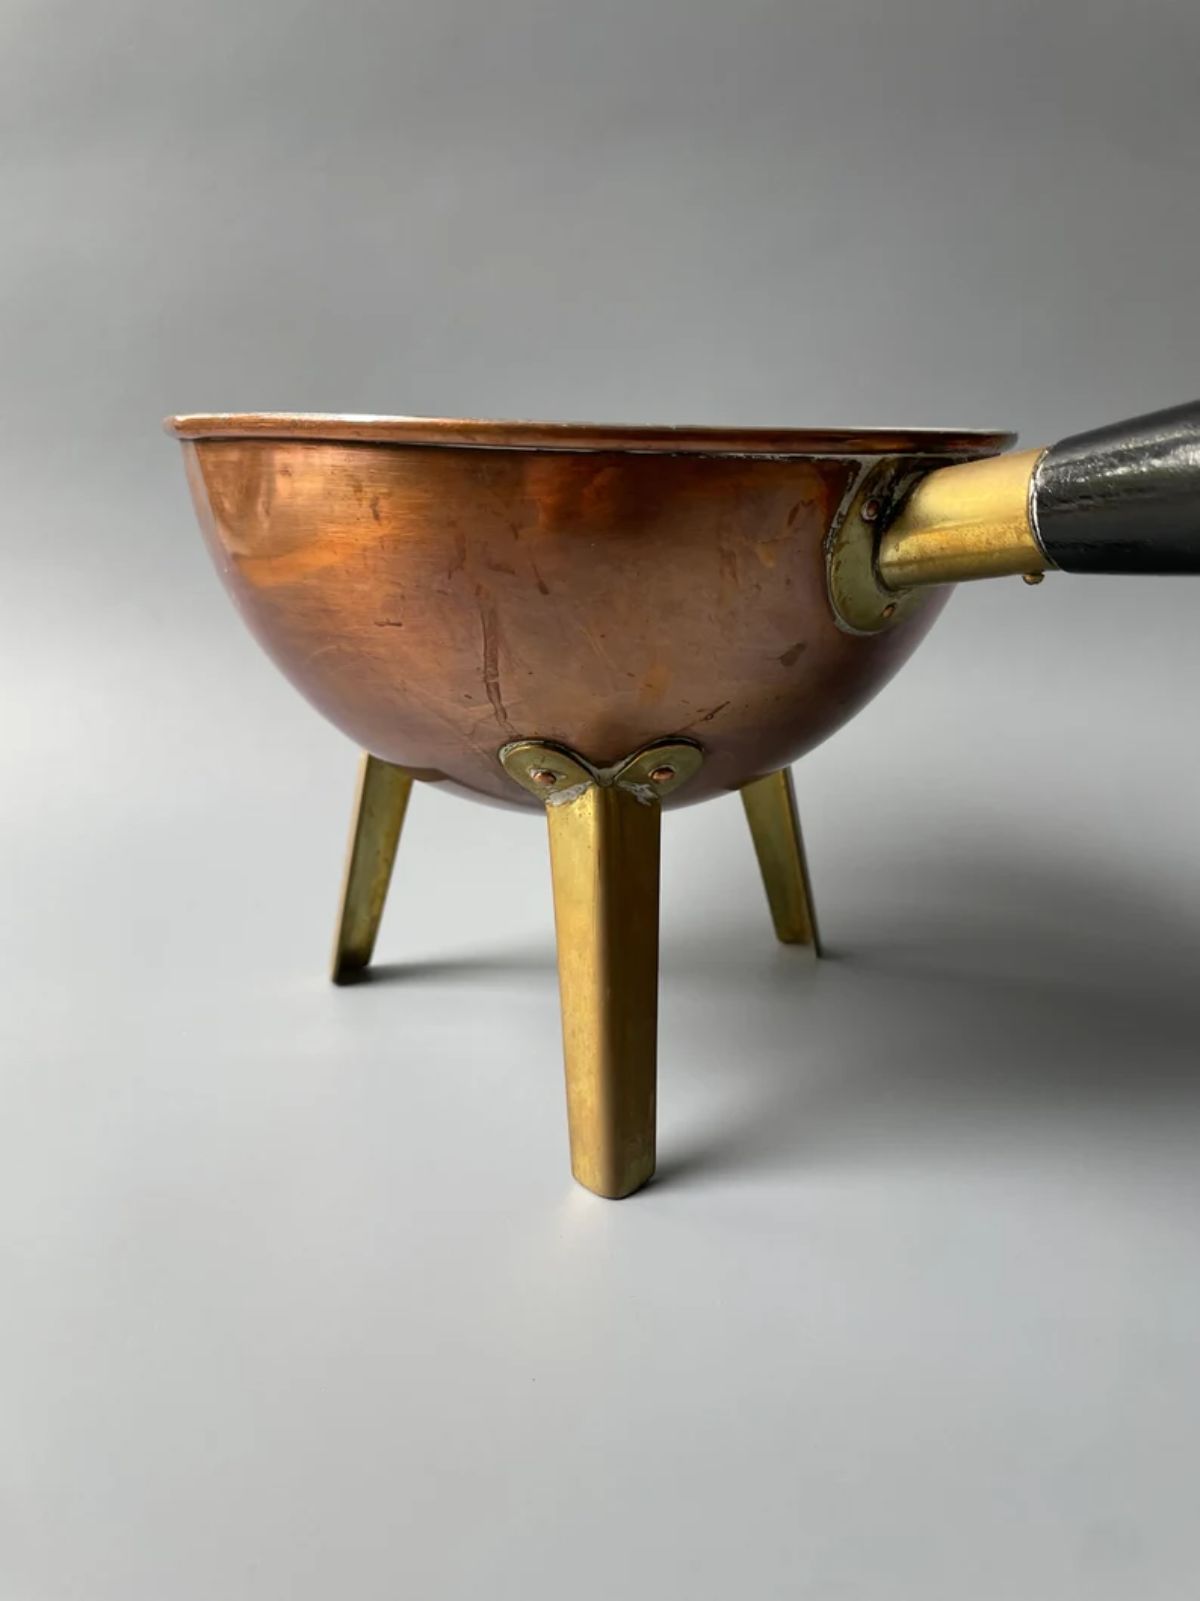 Vintage Copper Pot With Wooden Handle